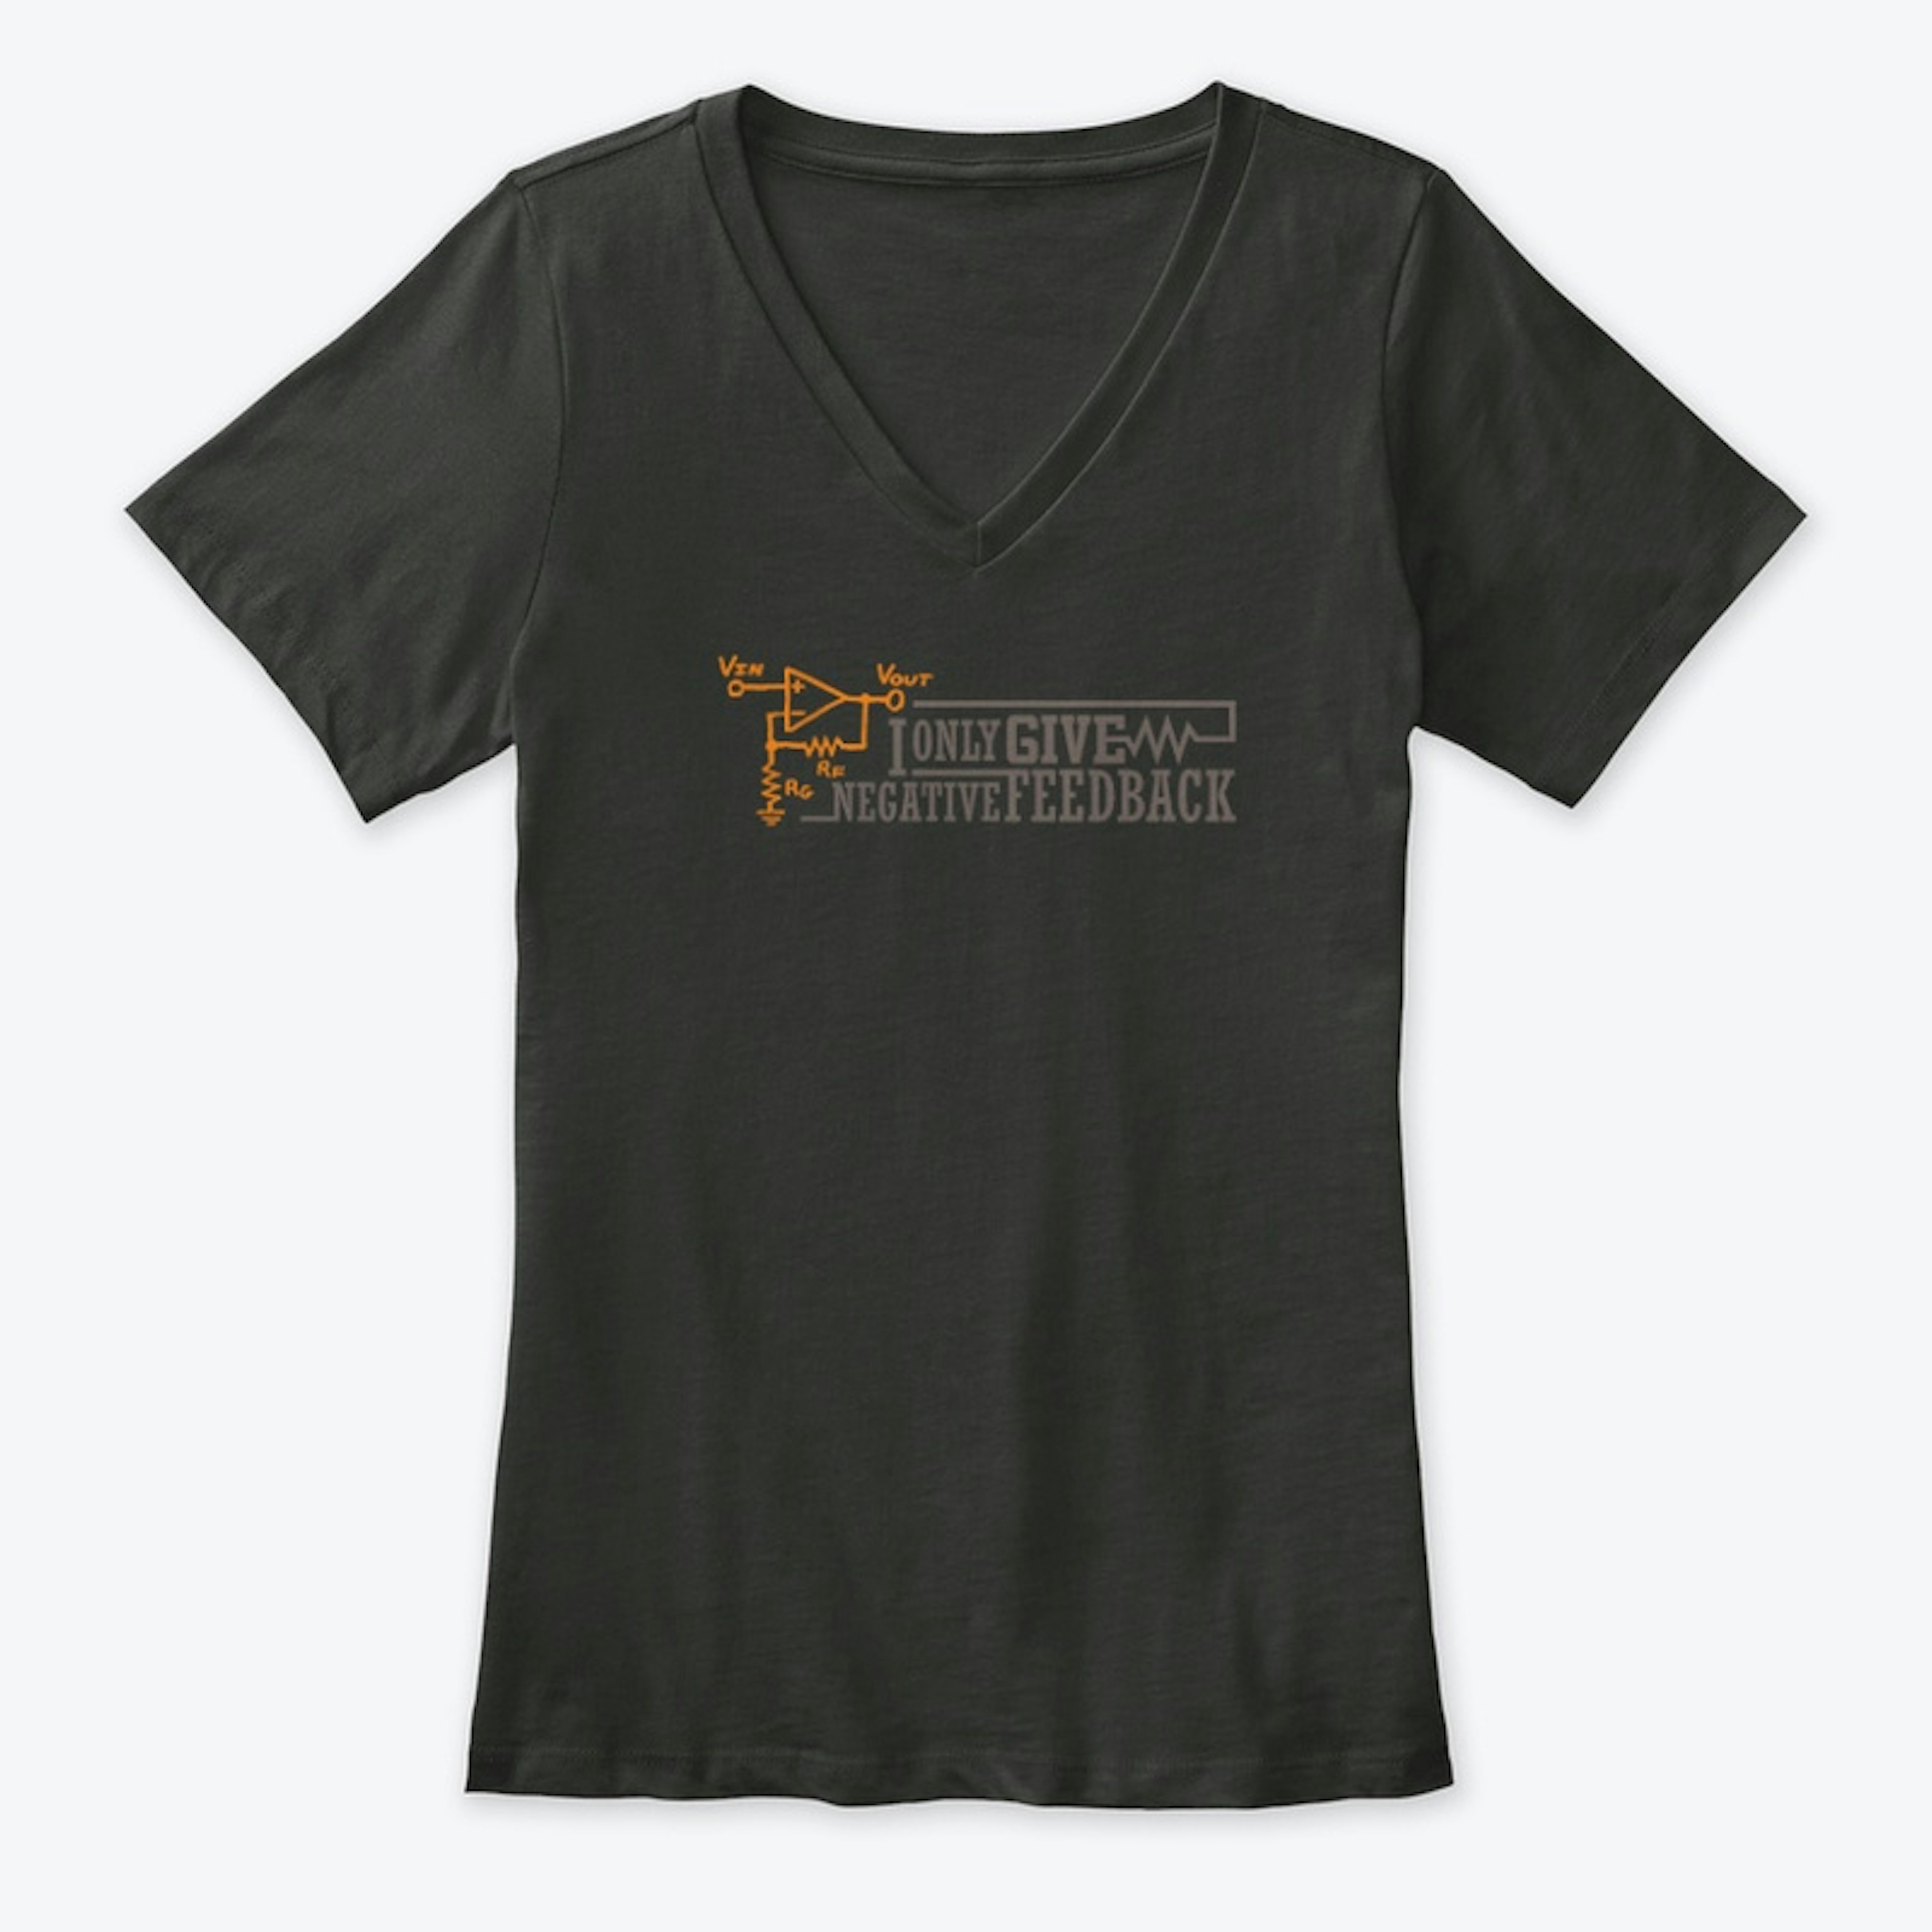 New EEVblog Negative Feedback T-Shirt